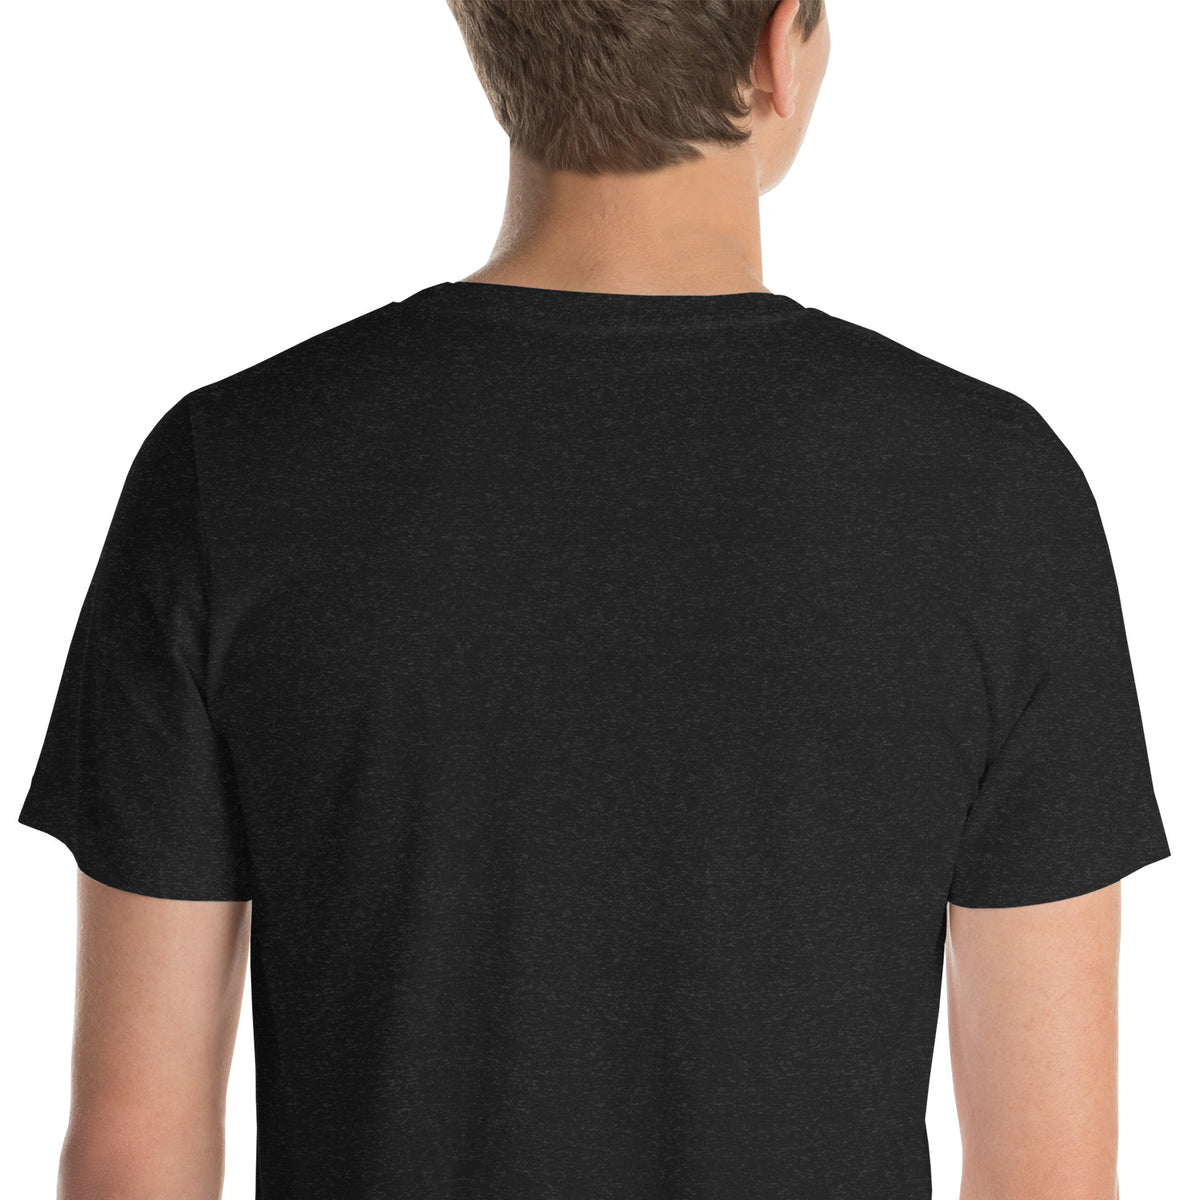 Tinty Vibes - Unisex Cut T-Shirt